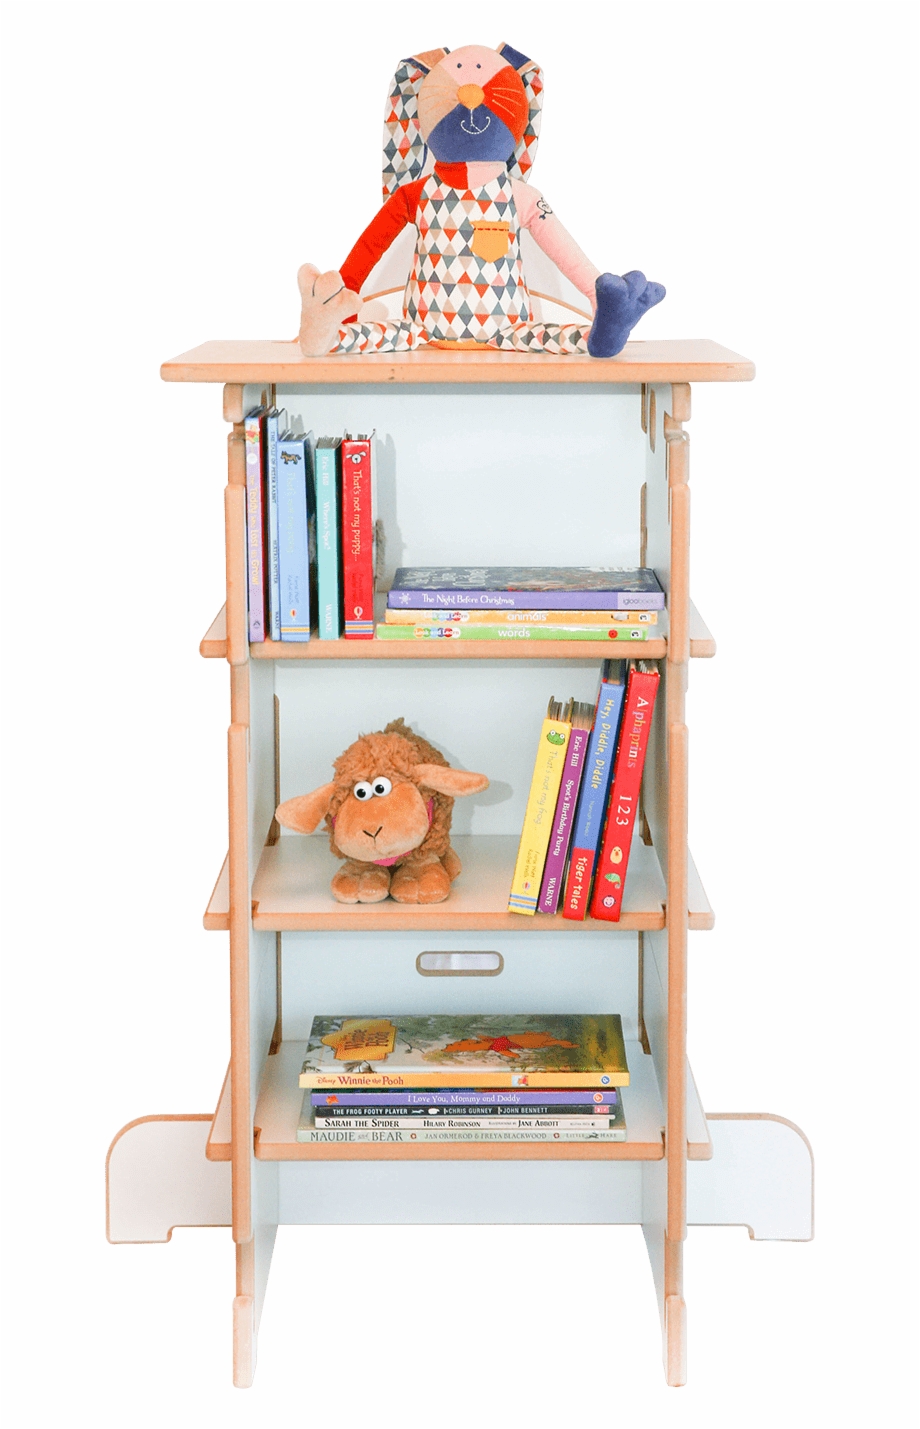 Bookshelf Dolls House Kids Furniture Learning Tower Design